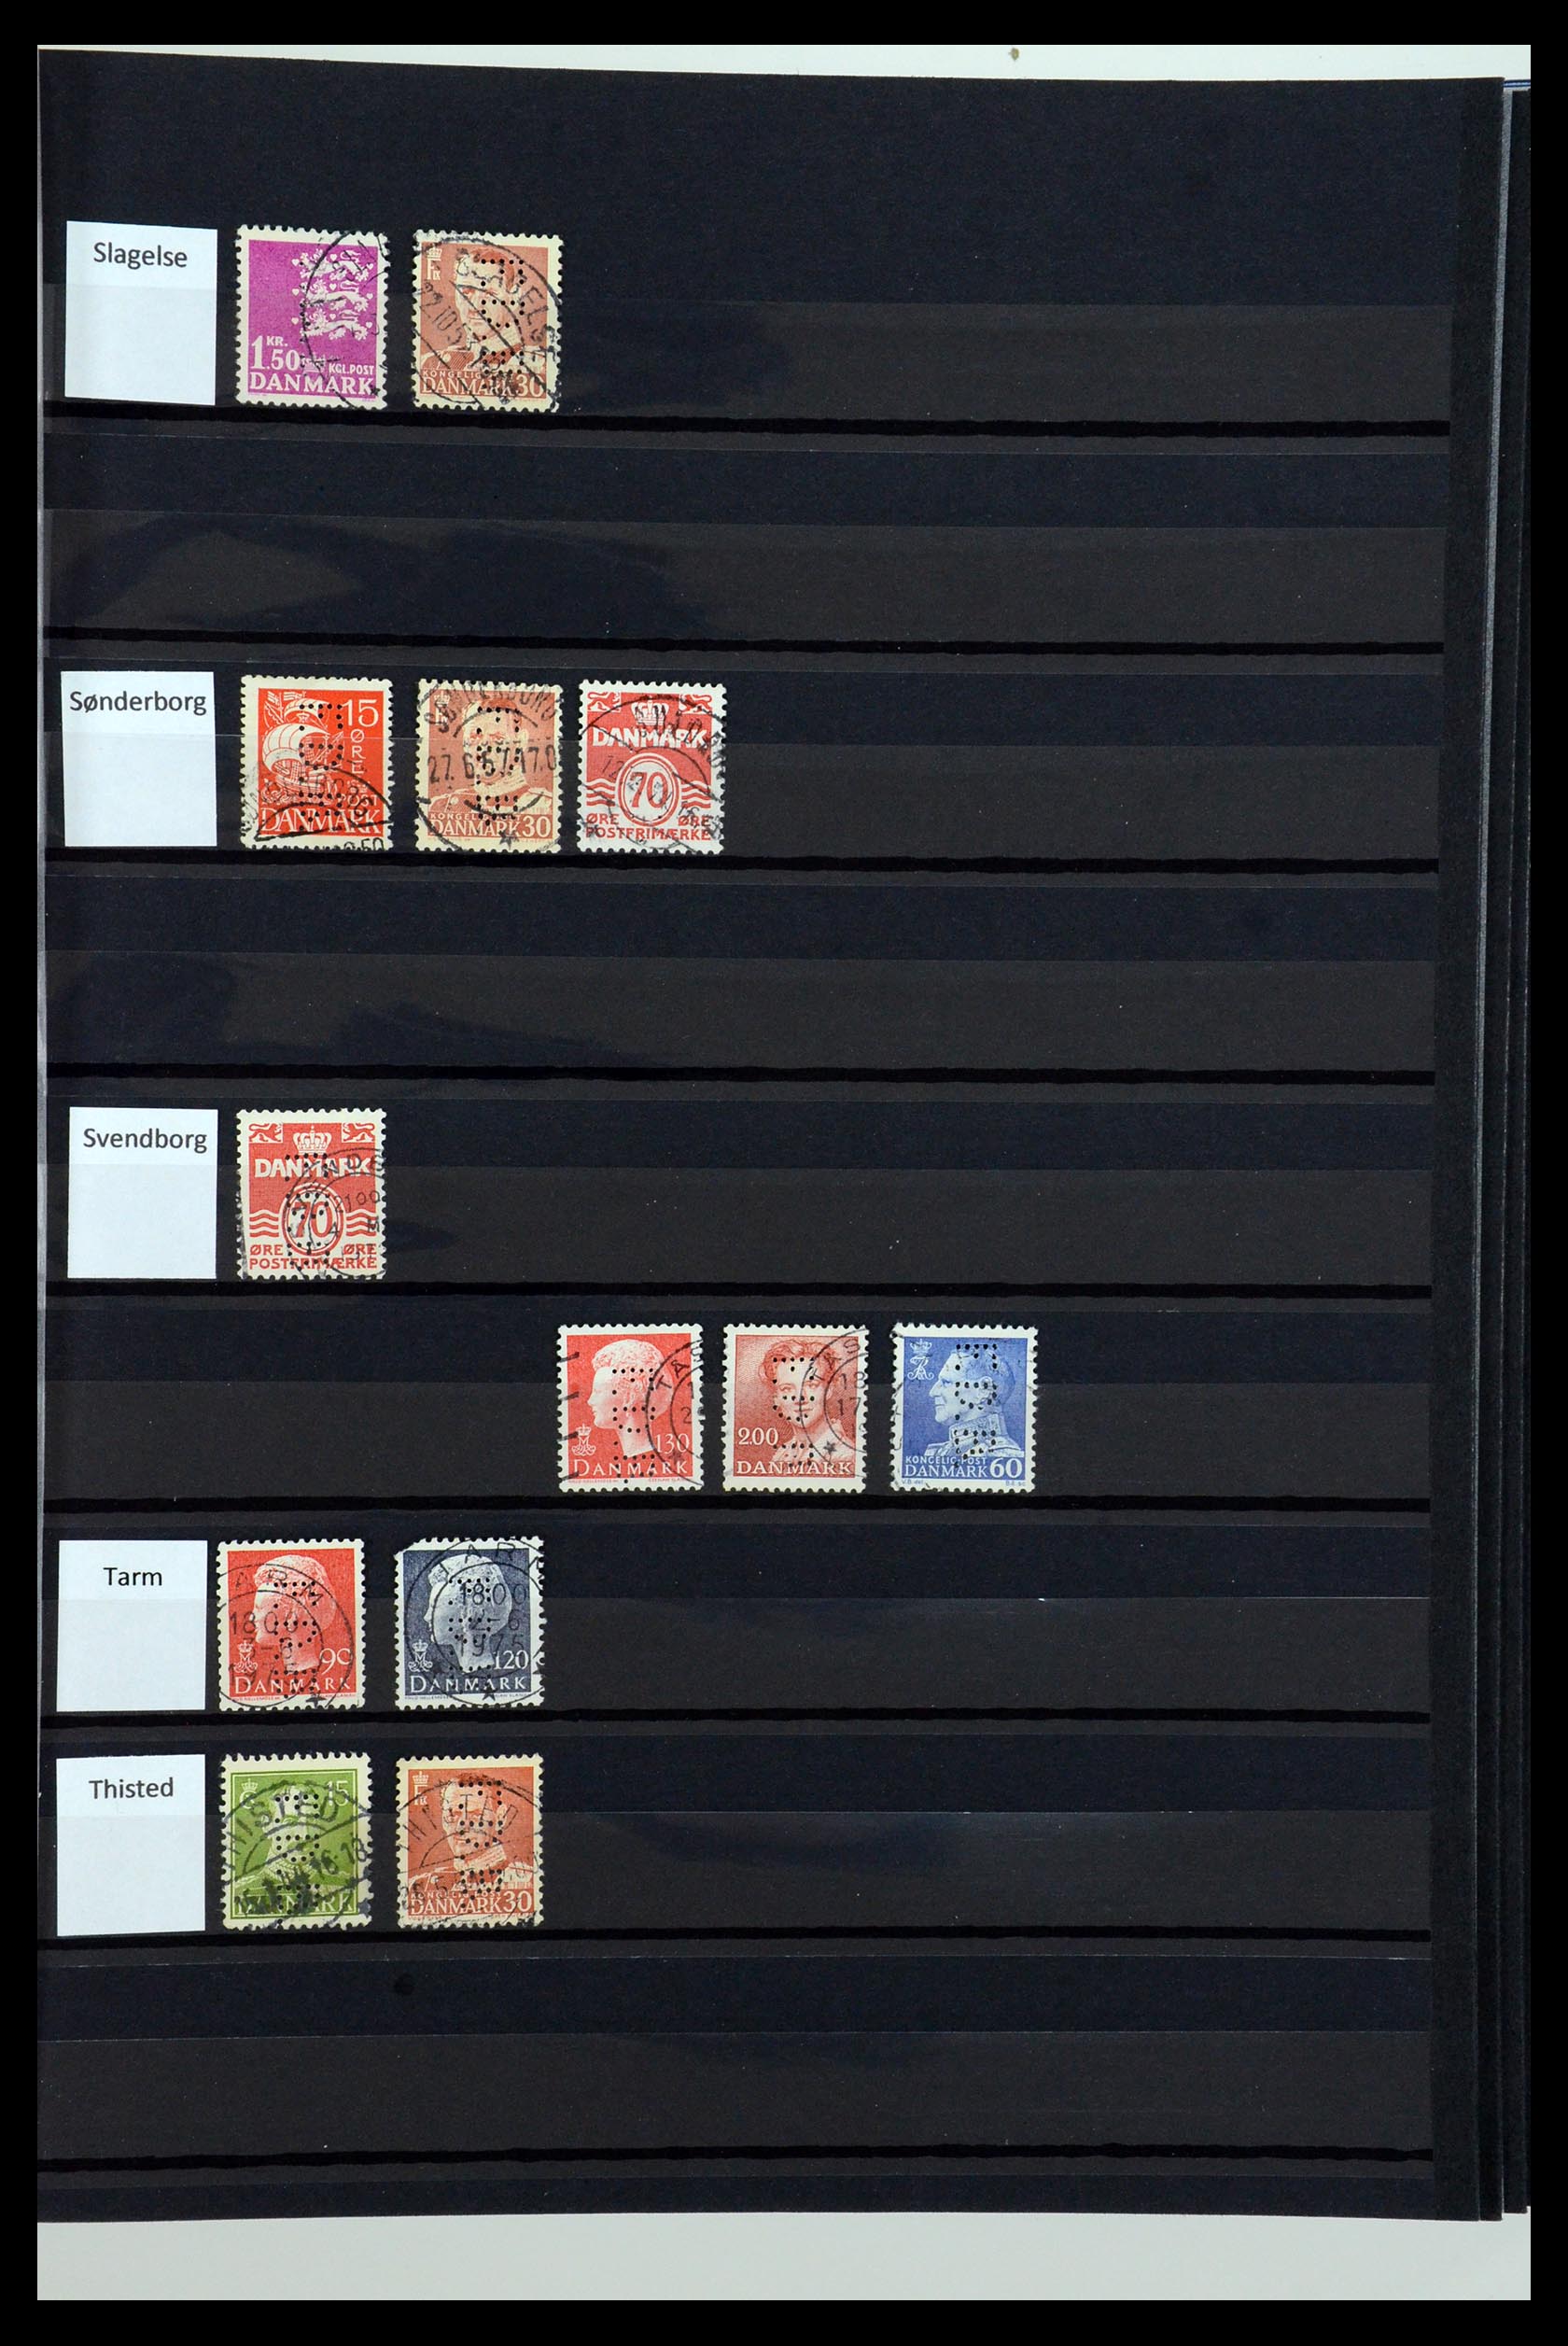 36396 073 - Stamp collection 36396 Denmark perfins.